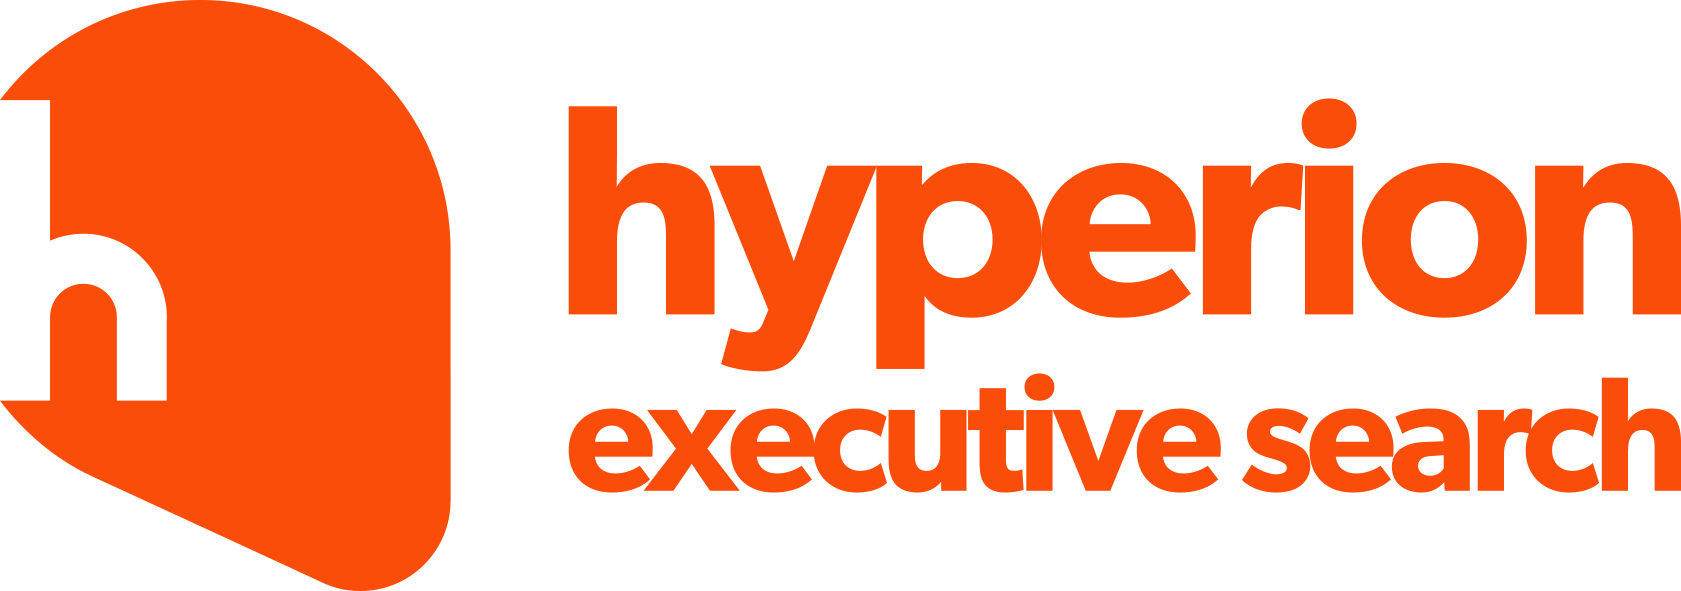 Hyperion Executive Search Logo Transparent